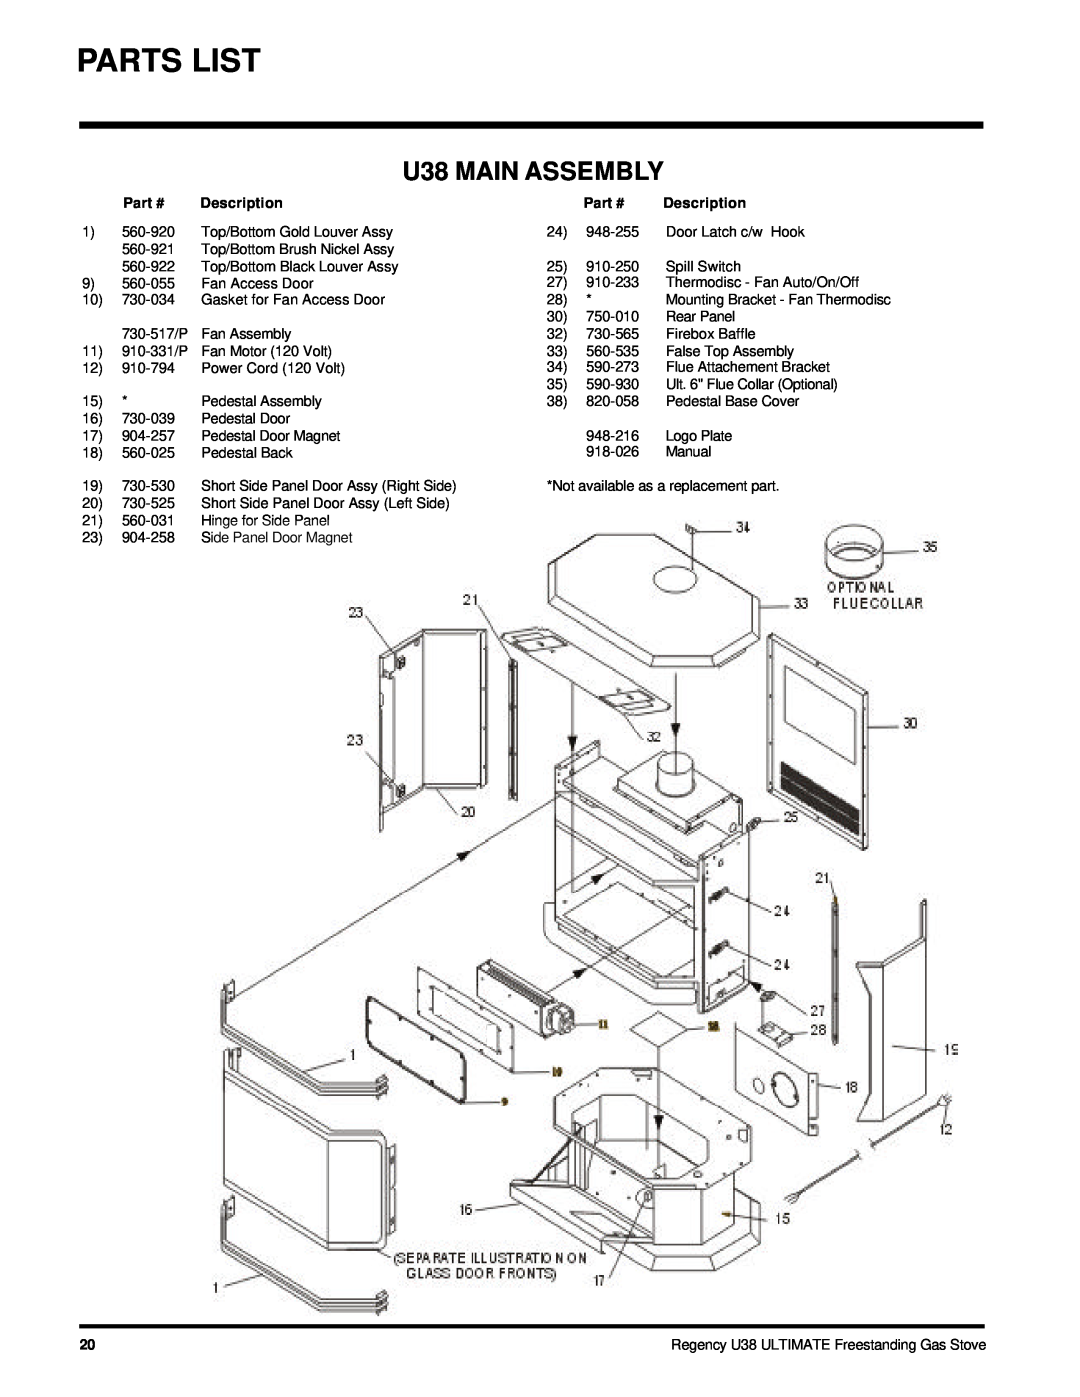 Regency U38-LP, U38-NG Parts List, U38 MAIN ASSEMBLY, Description, Regency U38 ULTIMATE Freestanding Gas Stove 